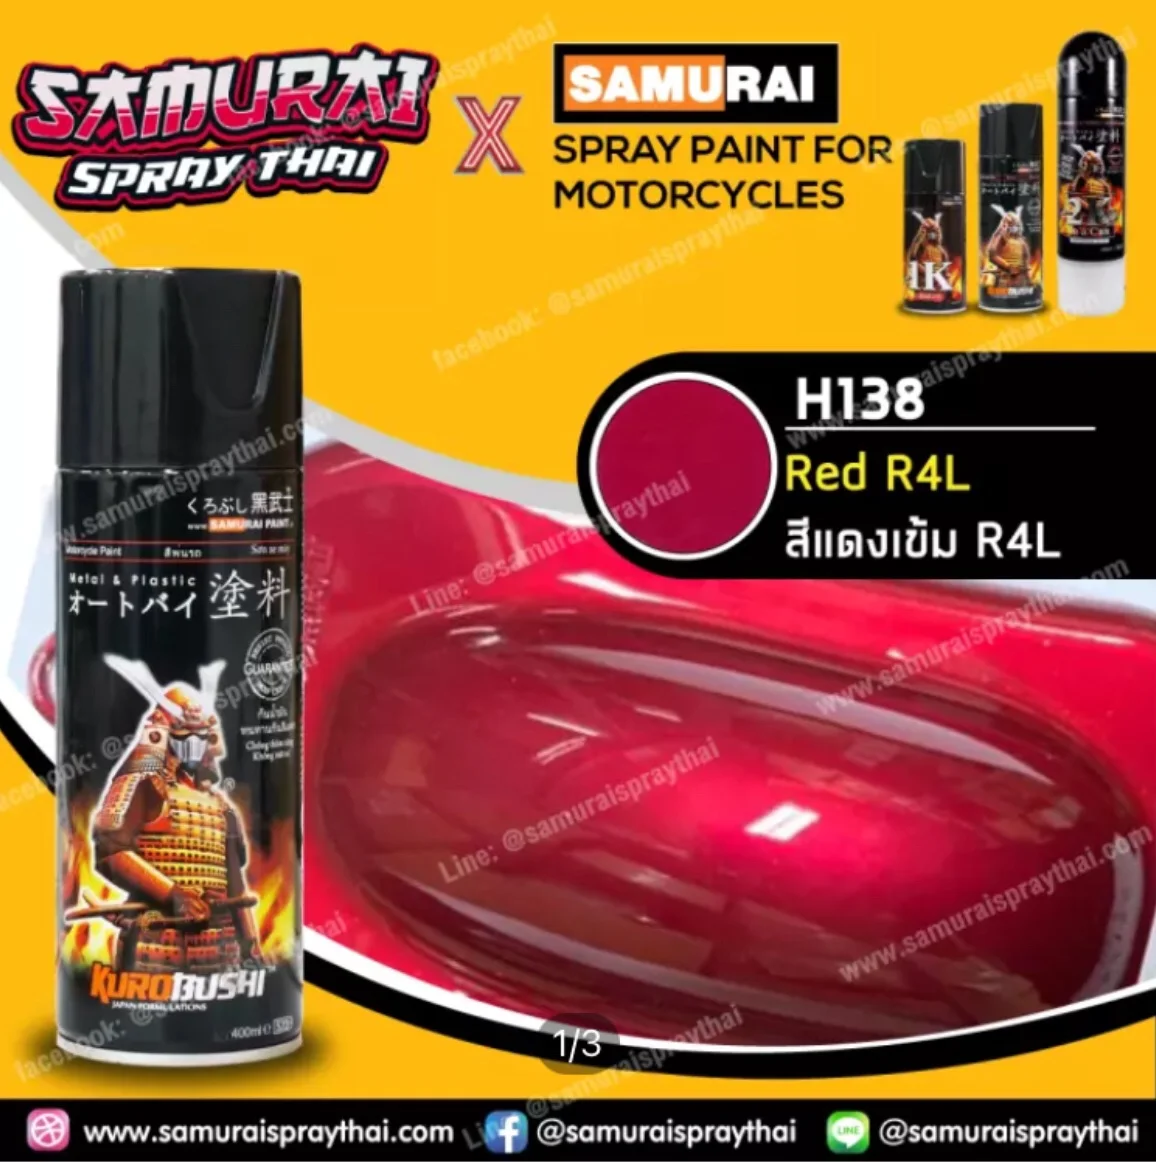 SAMURAI สีสเปรย์ซามูไร รถฮอนด้า สีแดงเข้ม R4L (สีแดงแก้วฮอนด้า) เบอร์ H138 * Red R4L Honda - 400ml